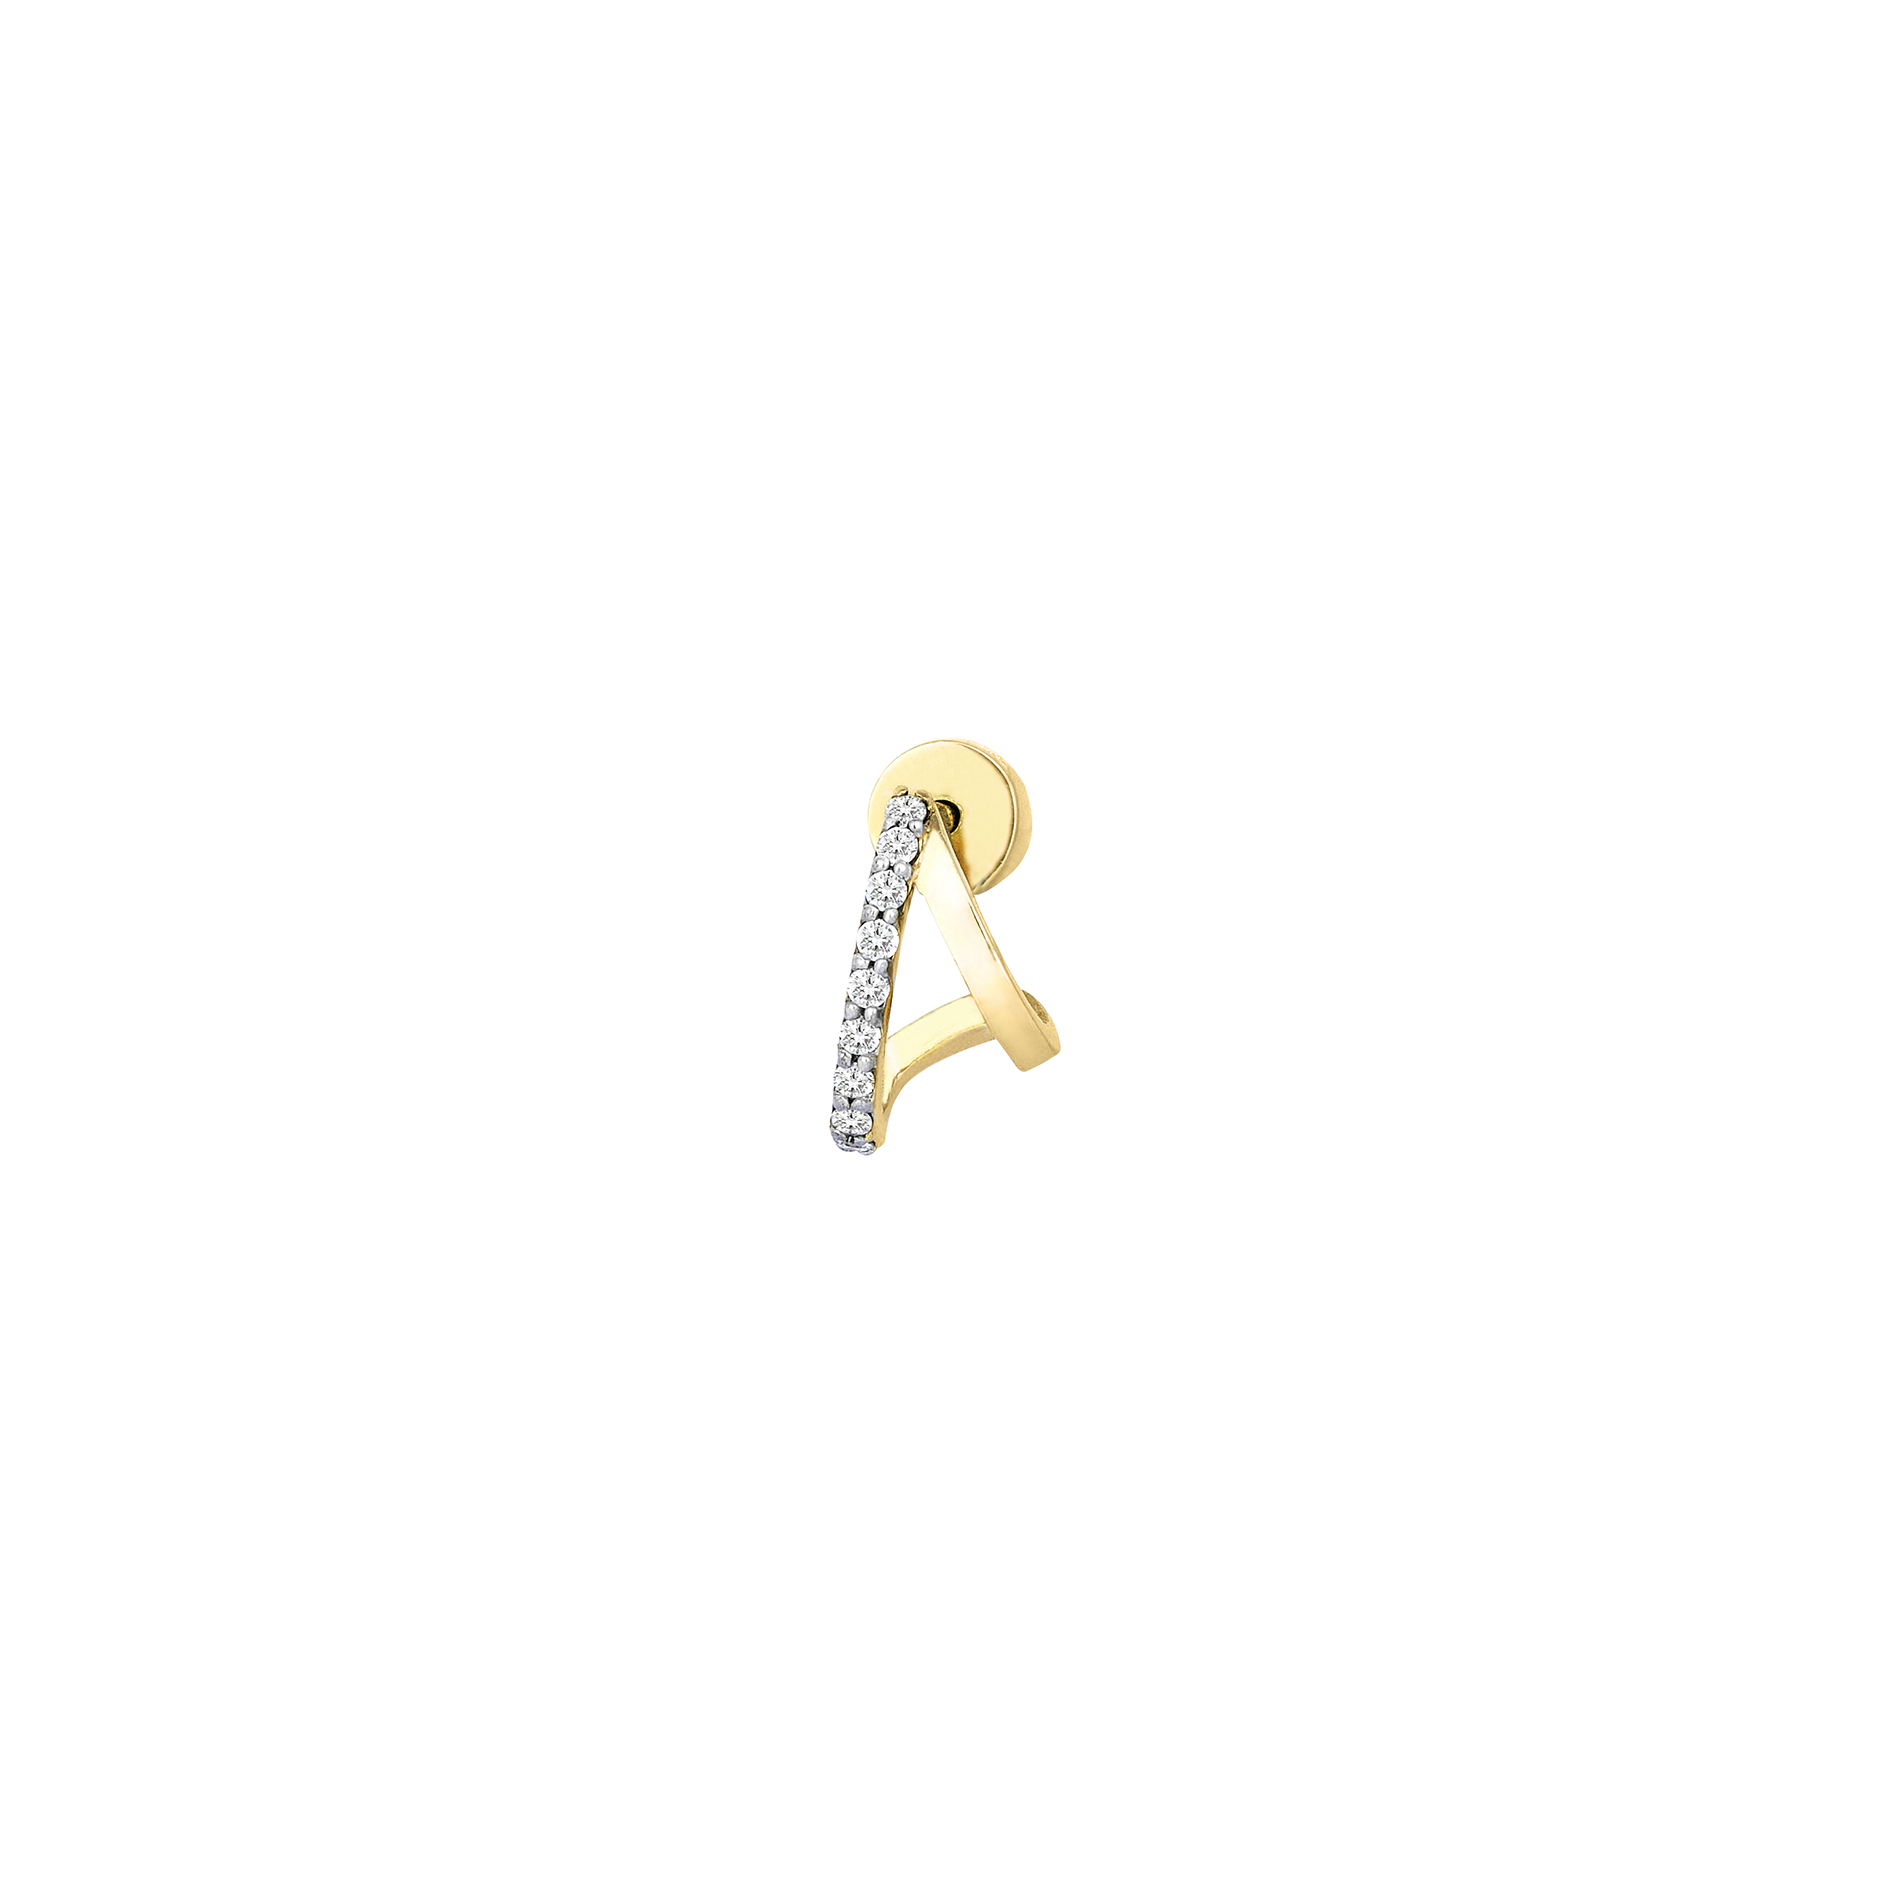 Mini Double Hoop Diamond Earring in Yellow Gold - Her Story Shop